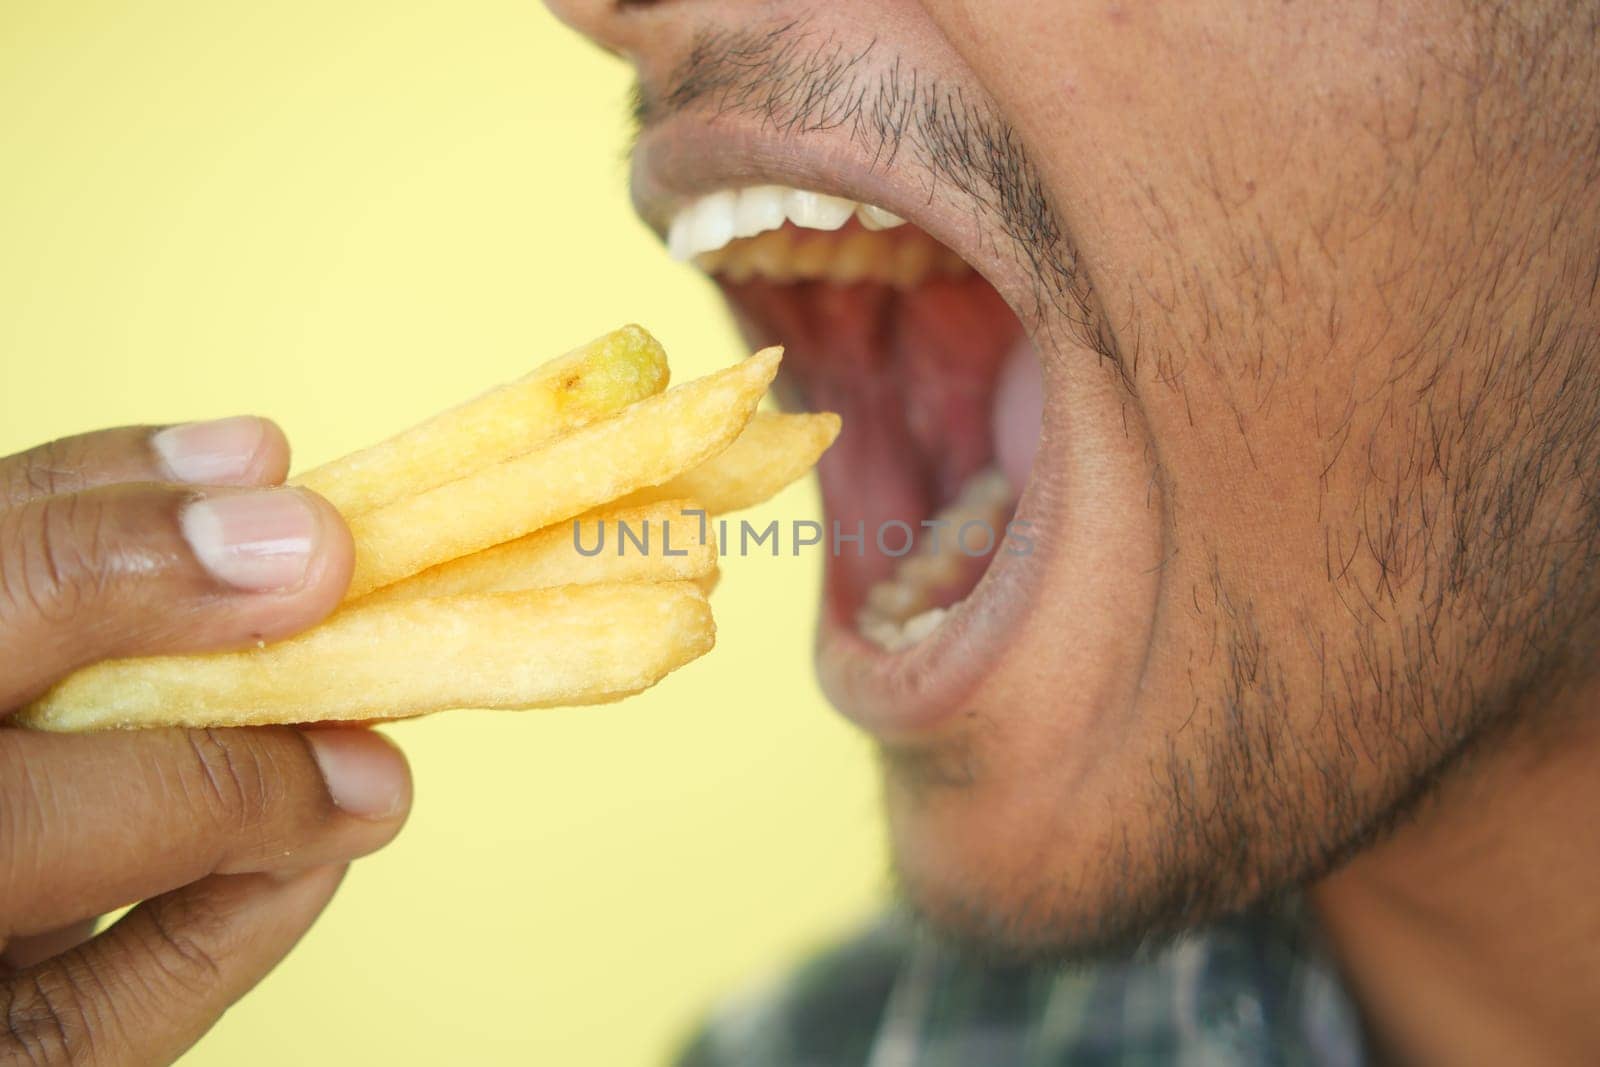 hungry man eating fries closeup,